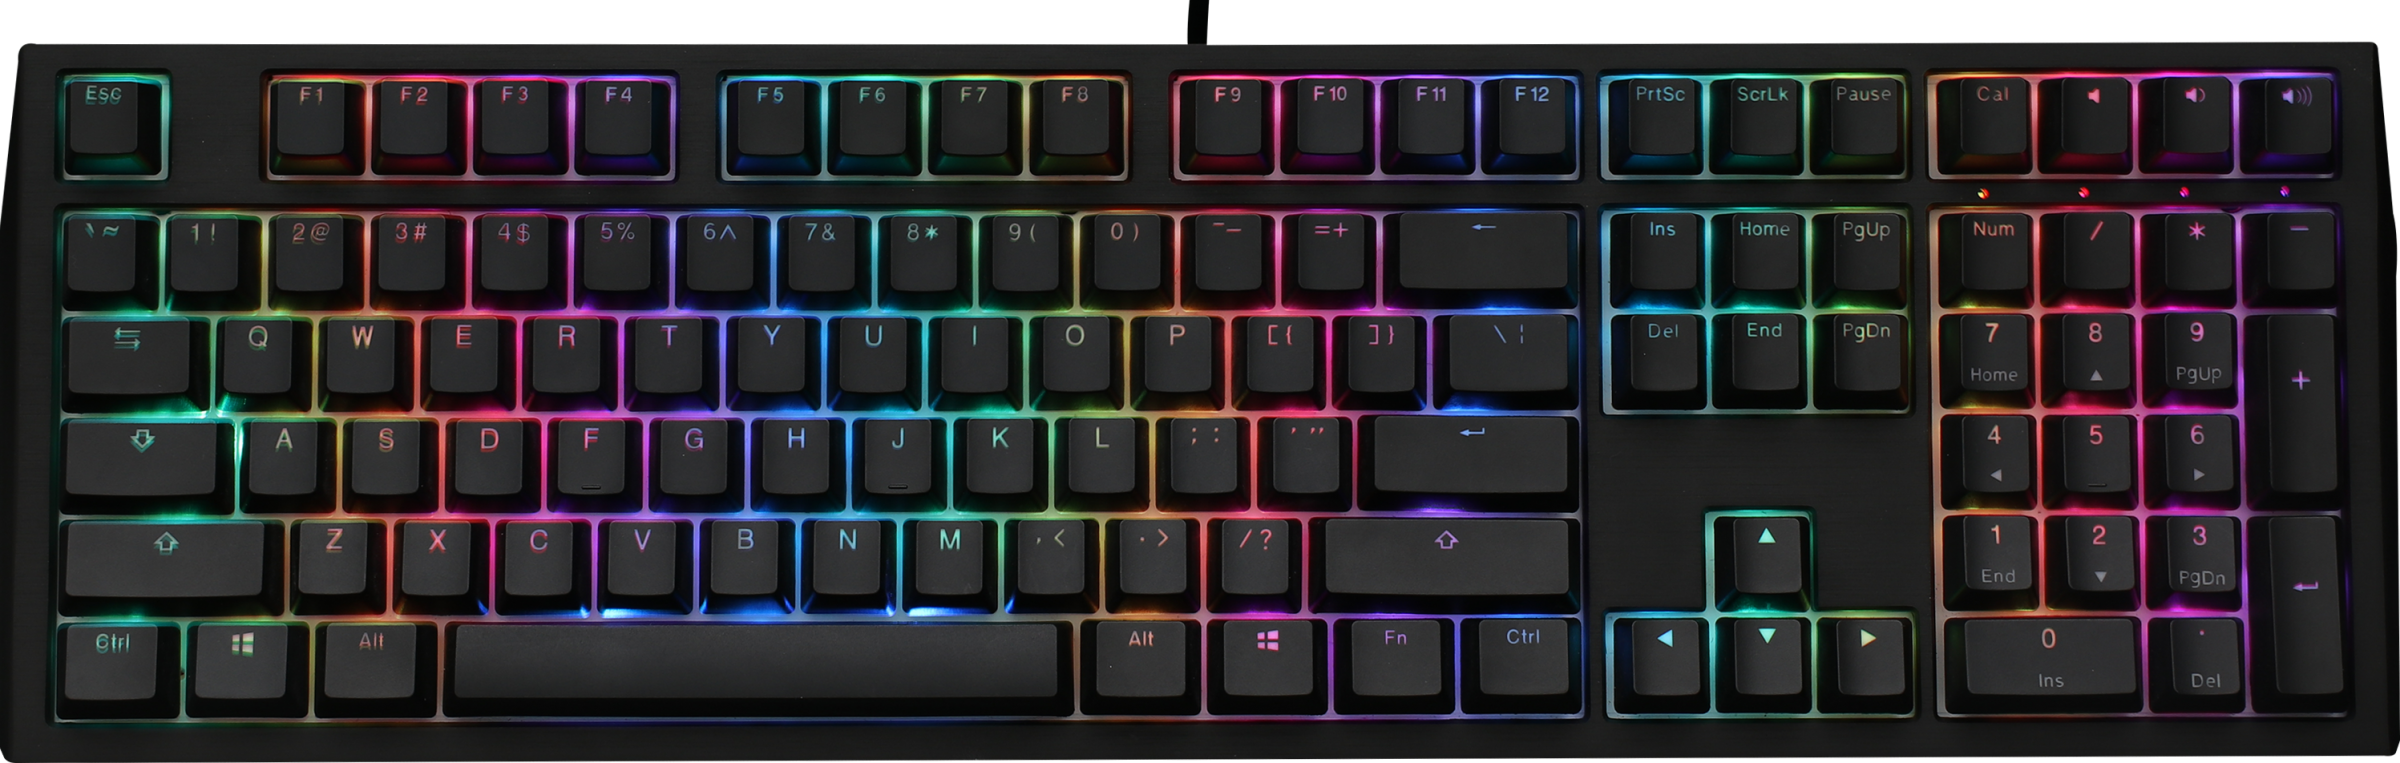 Ducky Shine 7 Blackout RGB Mechanical Keyboard